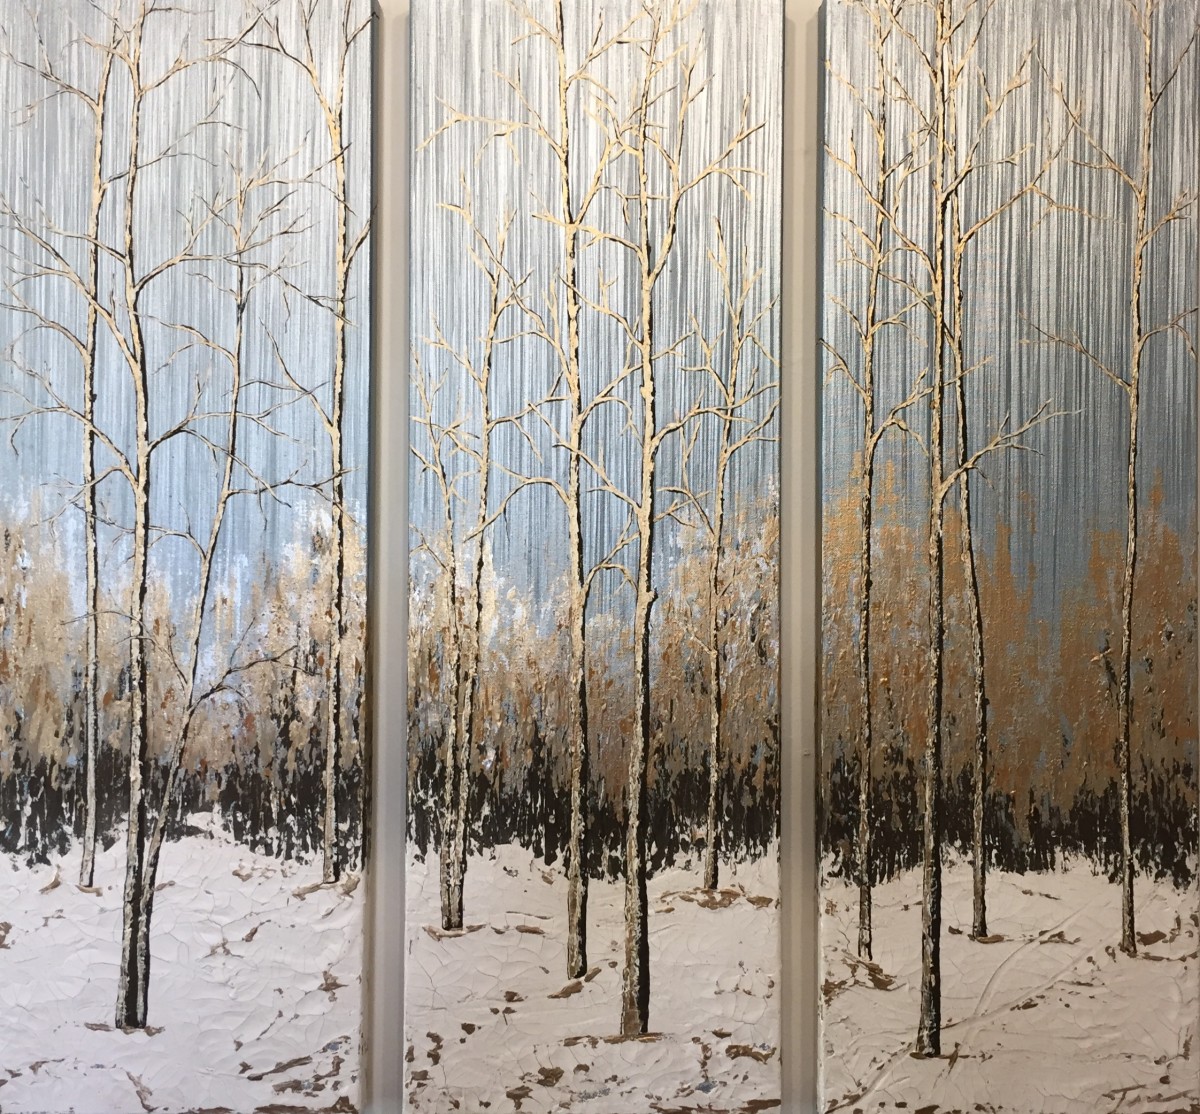 Aspens in the Snow 21 (triptych) by Tara Novak 